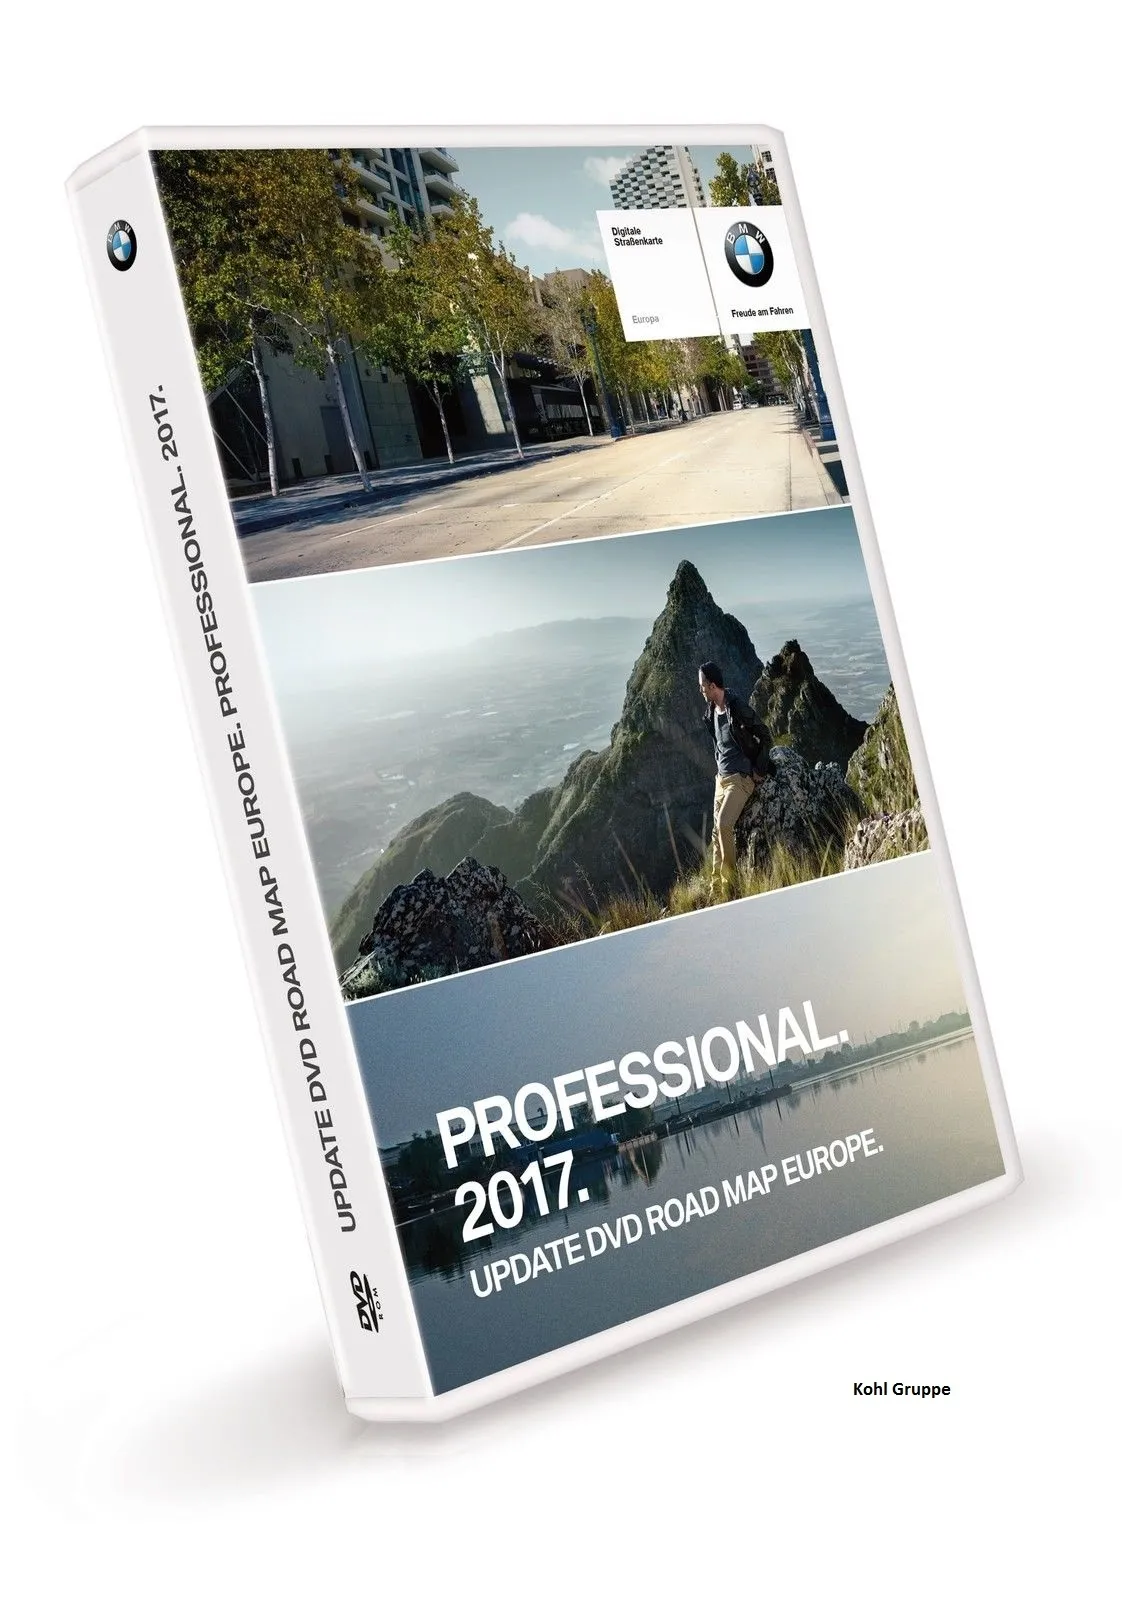 orig. BMW Navi Professional 2017 Update DVD Road Map Europa Europe